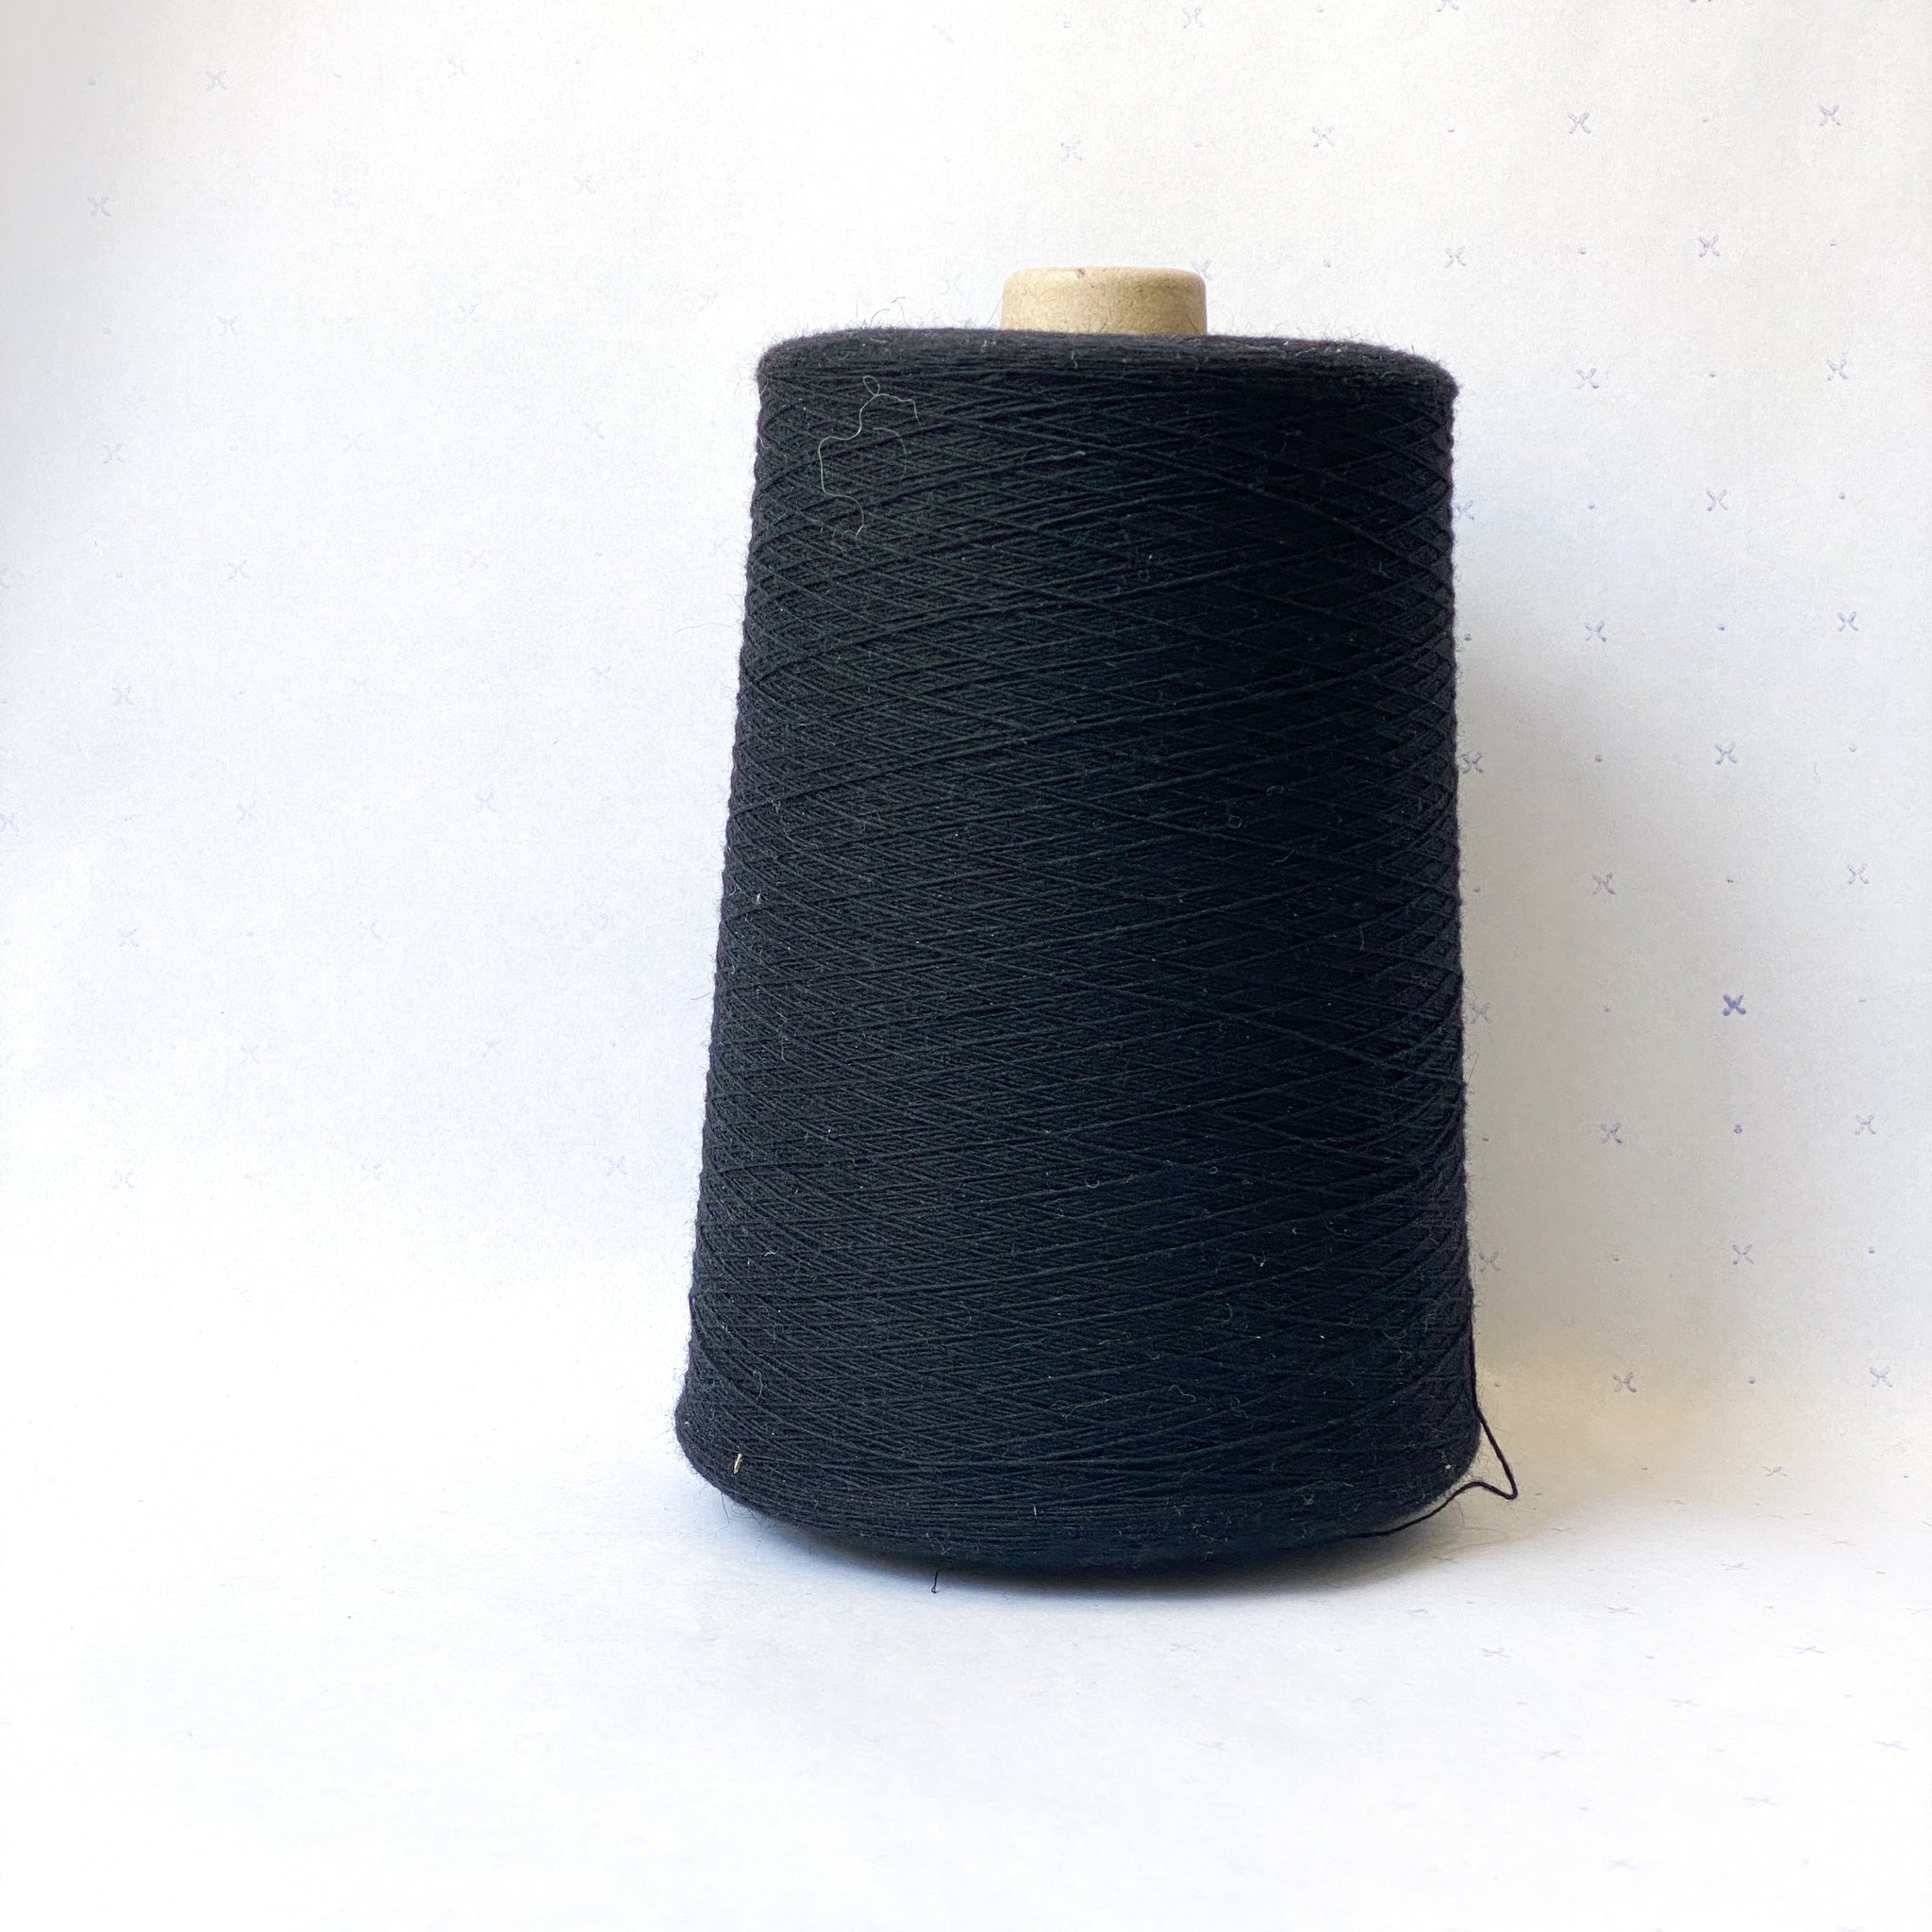 Single Ply Supergeelong Wool - Black